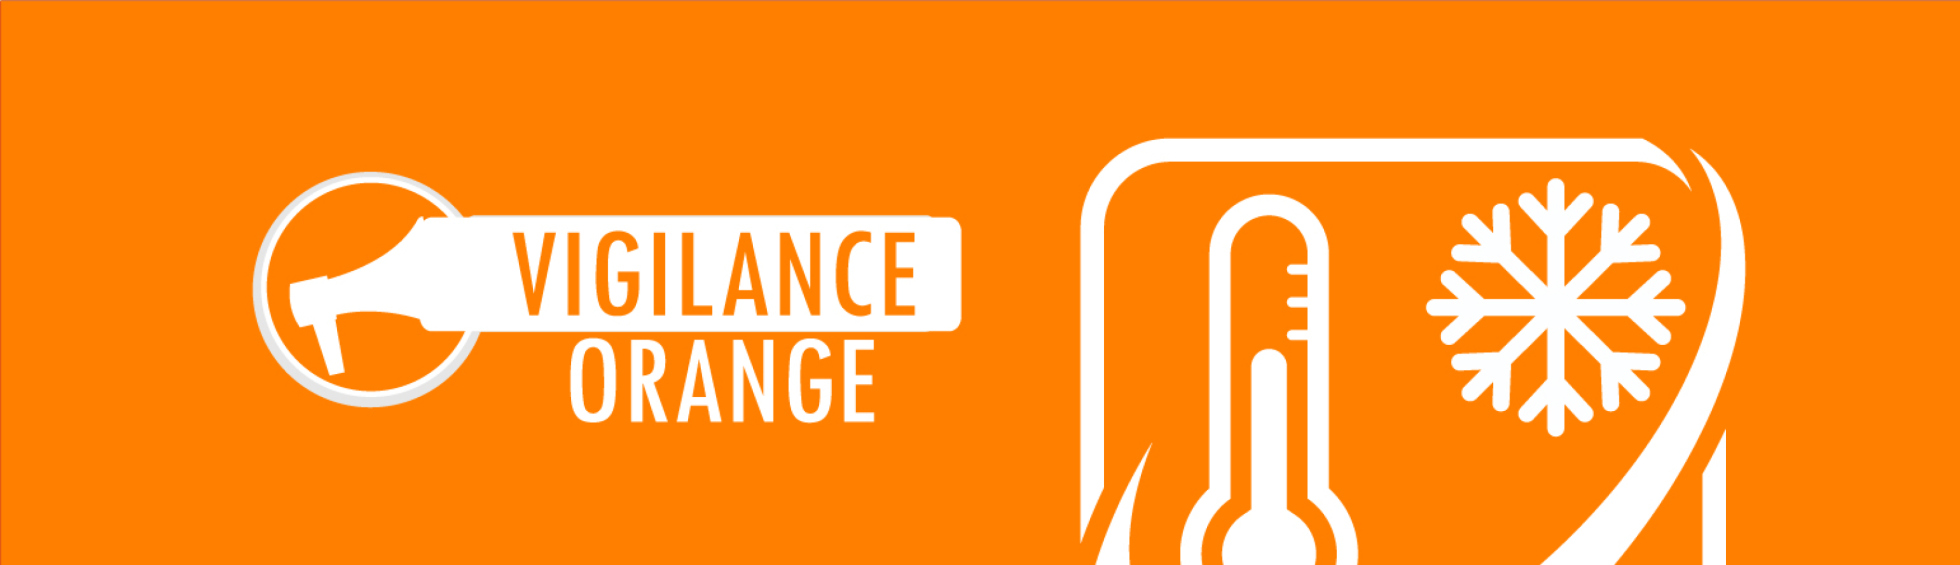 Vigilance Orange - Grand Froid